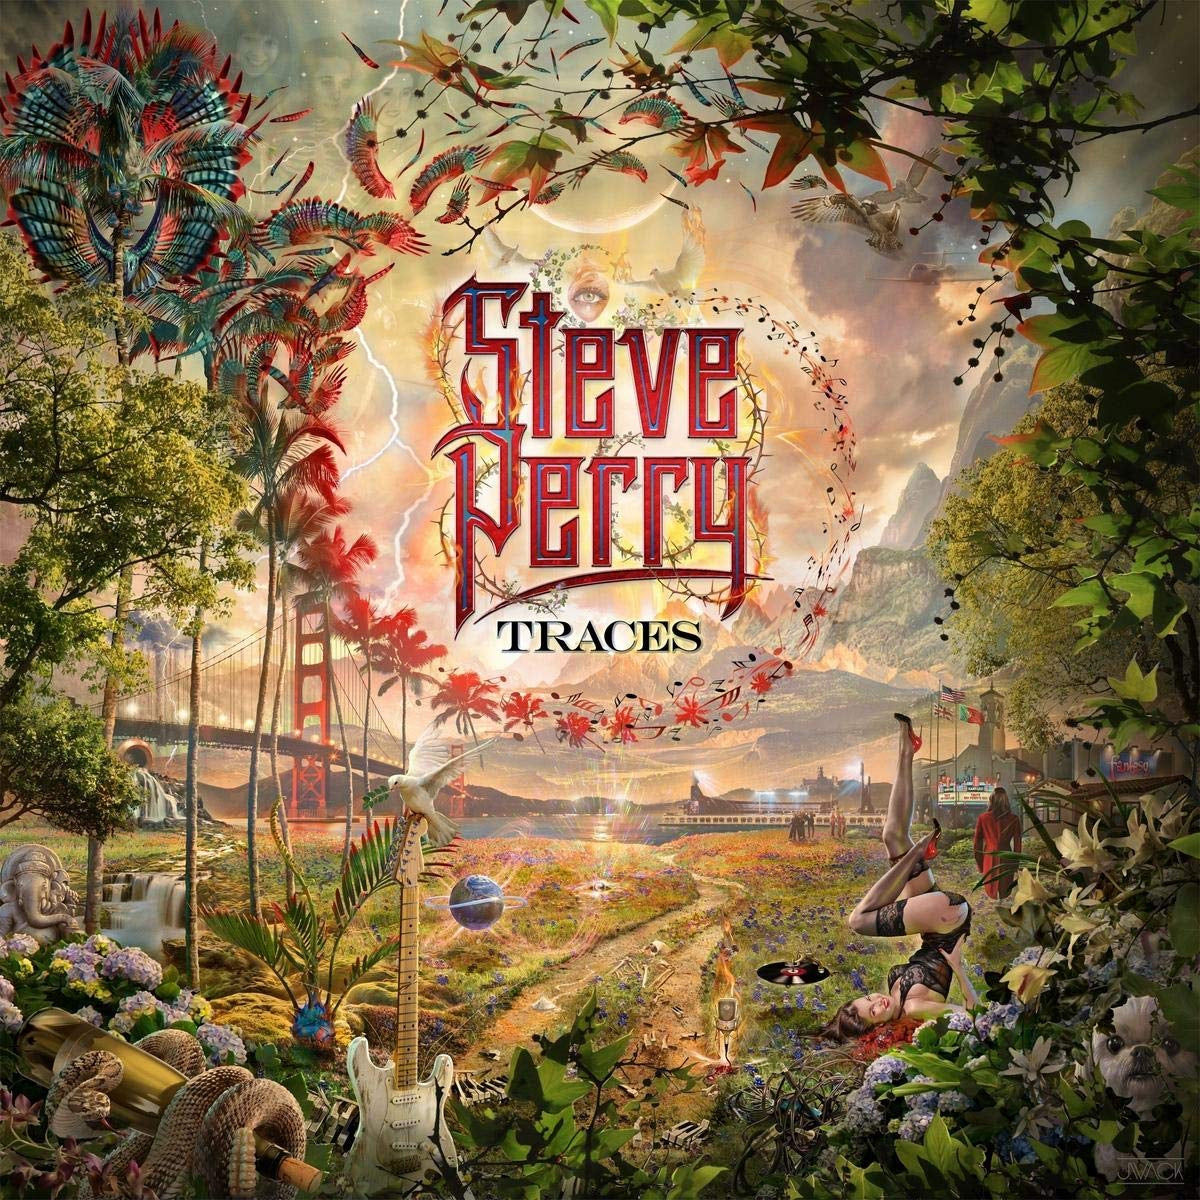 Steve Perry | Traces [Deluxe][2 LP Lenticular] | Vinyl